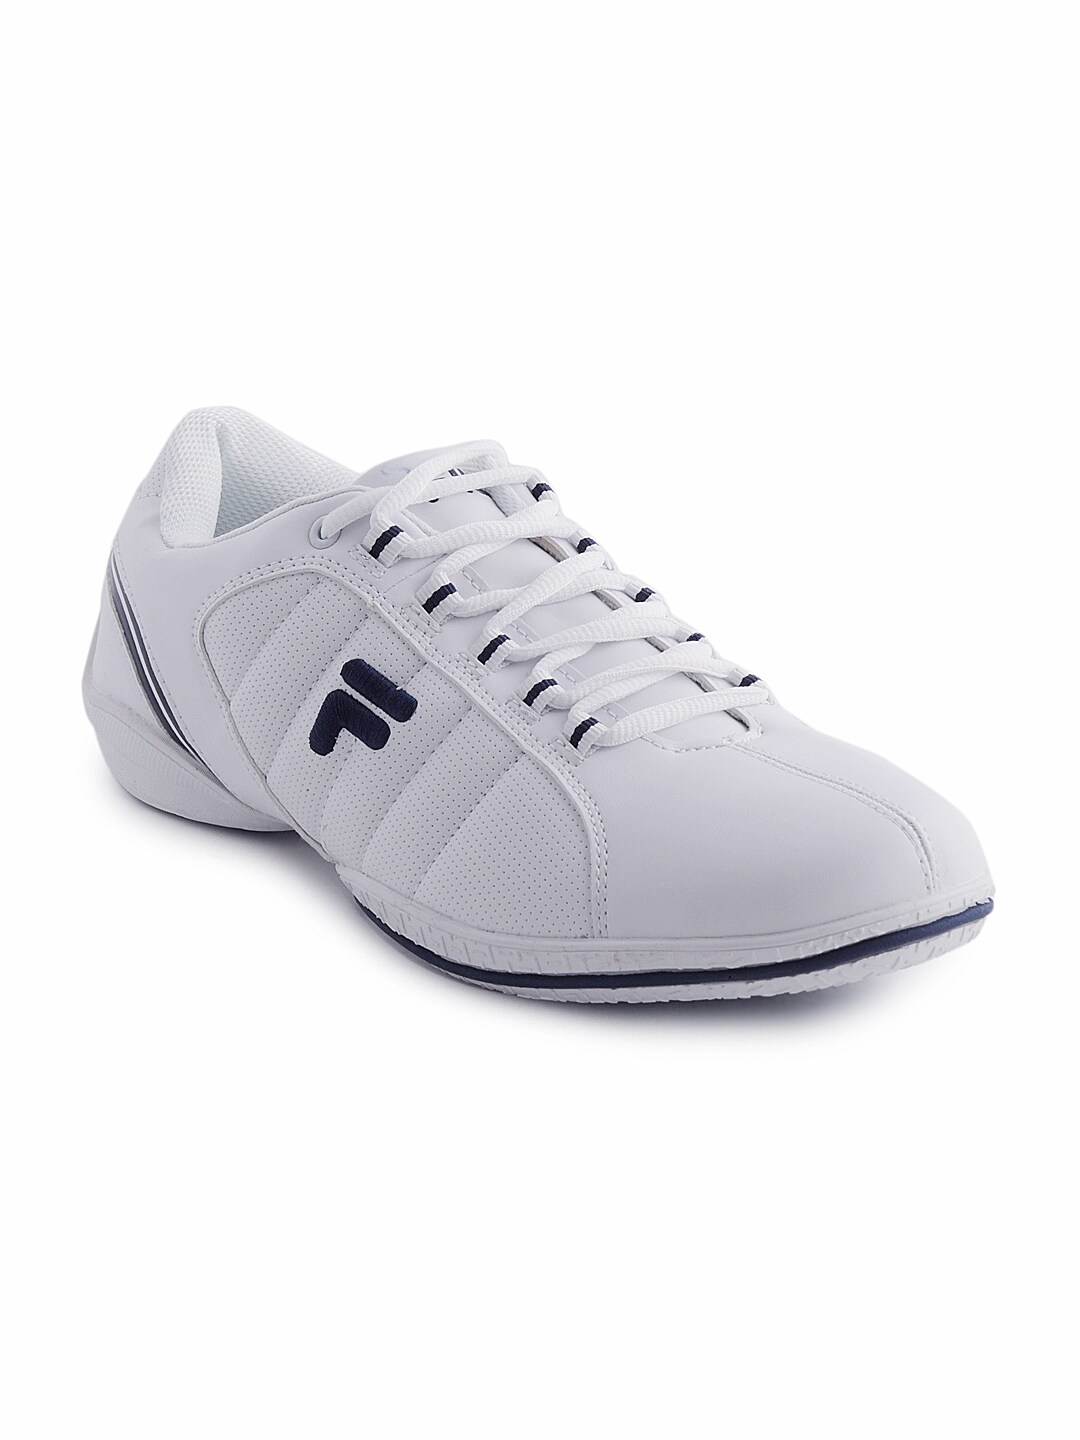 Fila Men Mercury II White Casual Shoes